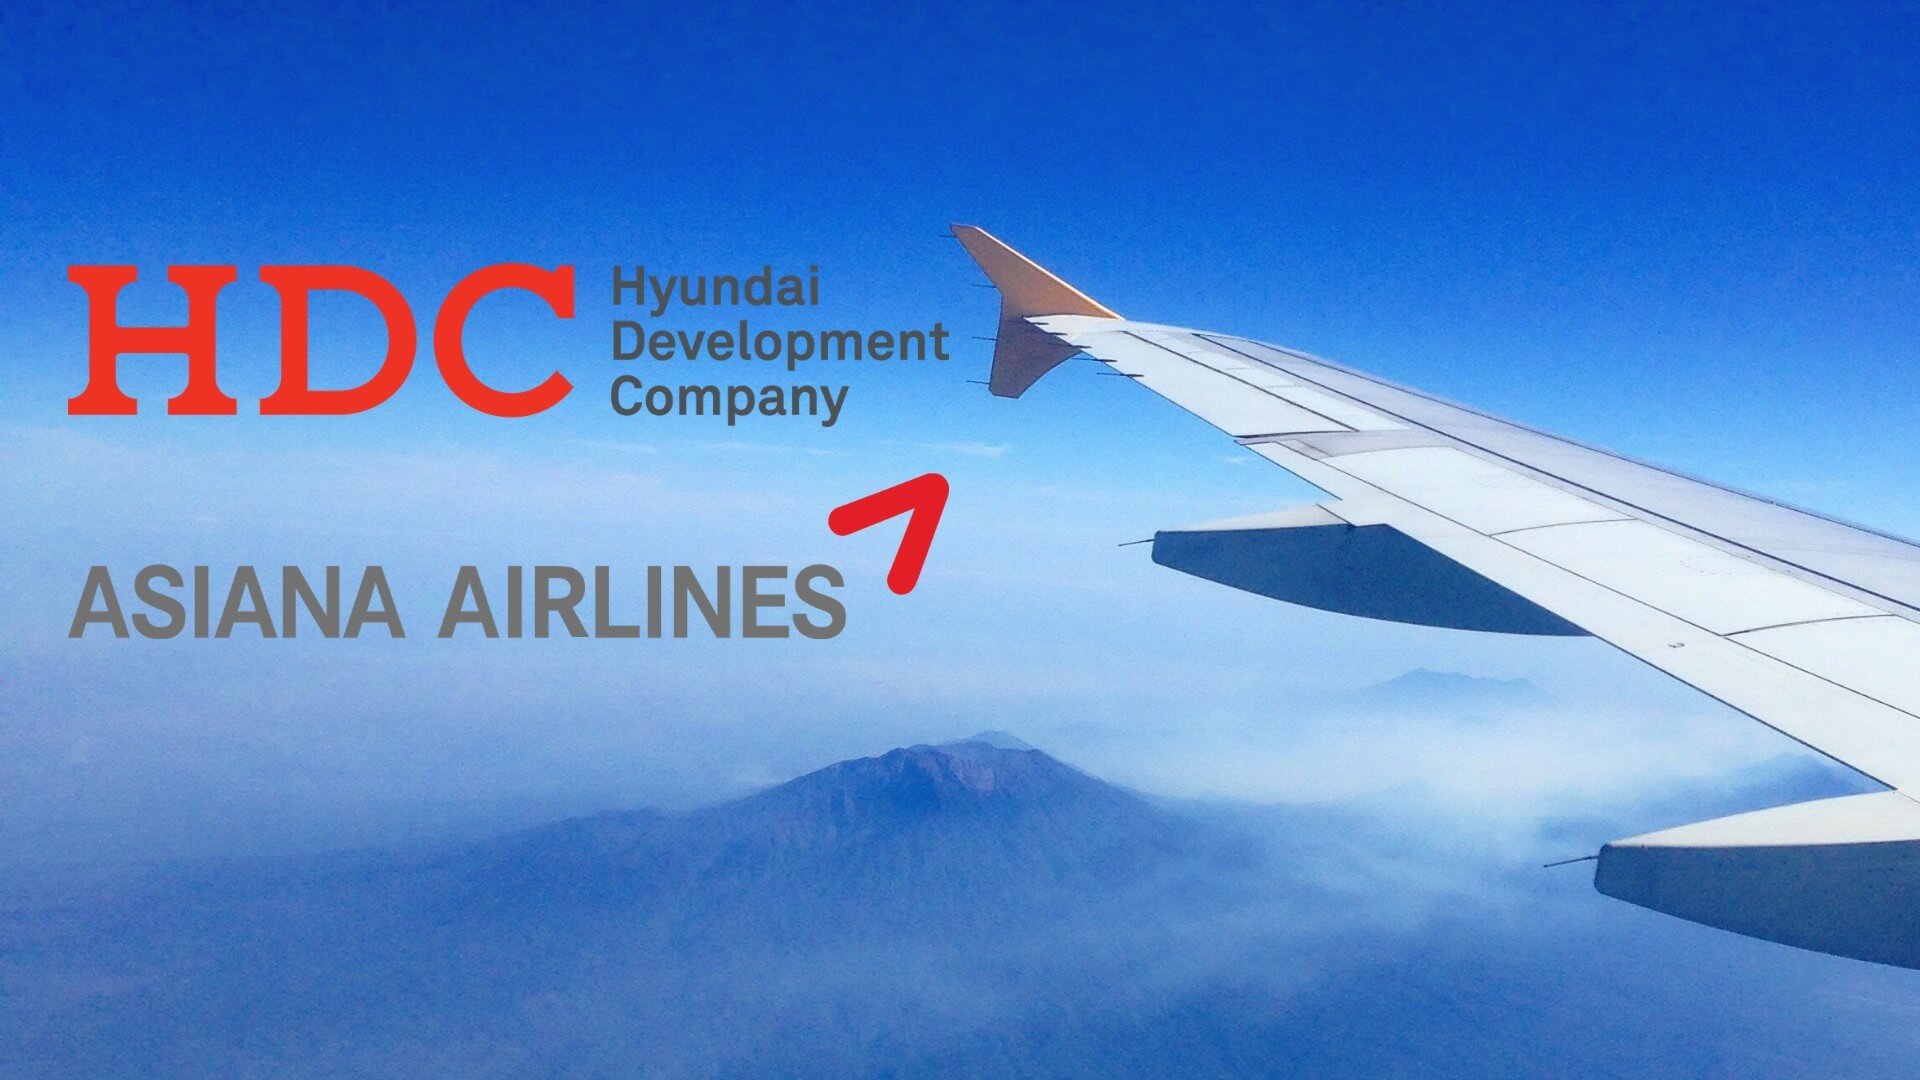 HDC Hyundai Development Company Acquires Asiana Airlines